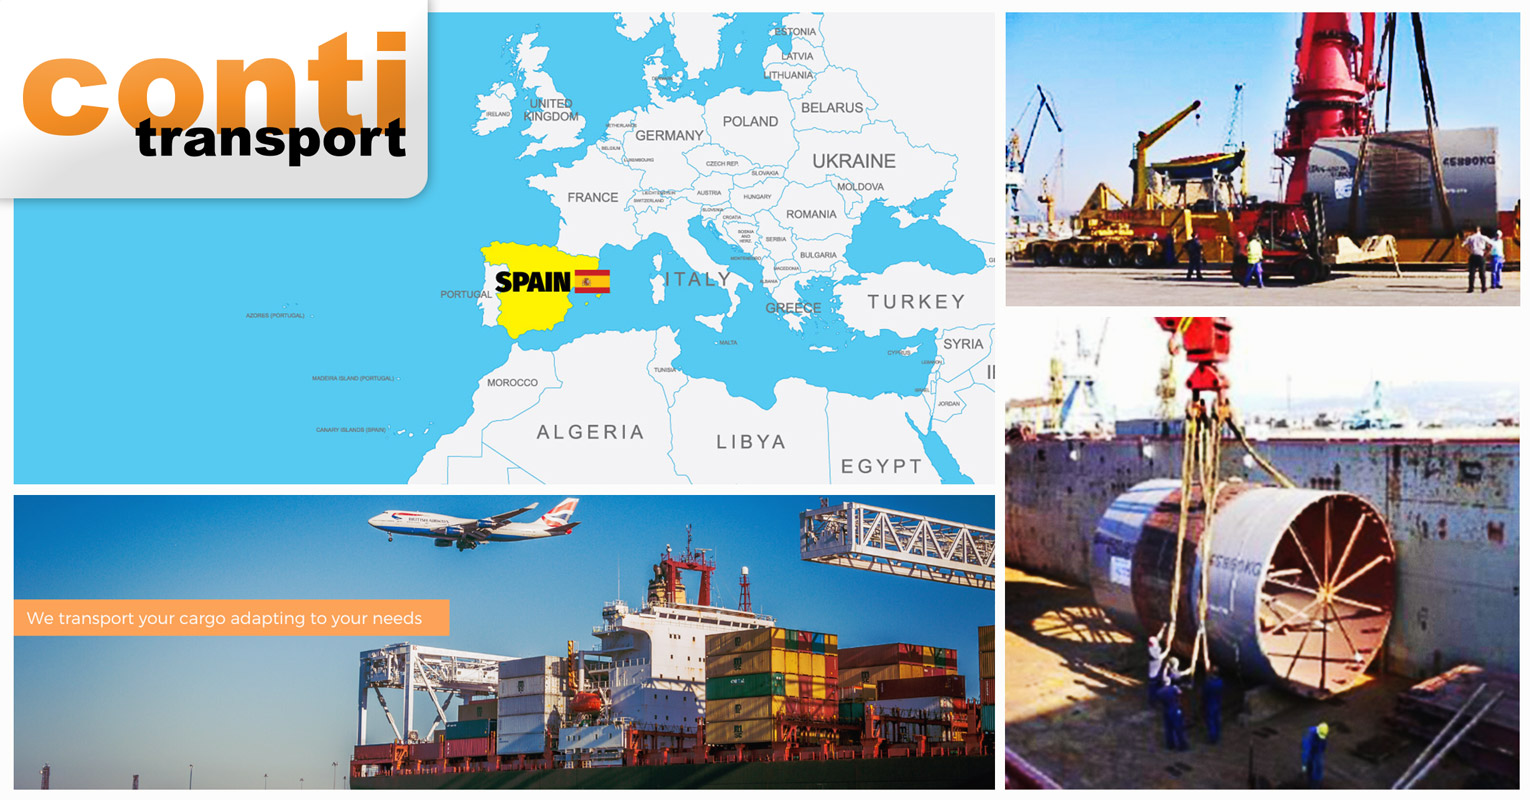 New member representing Spain – Continental Worldwide Logistics